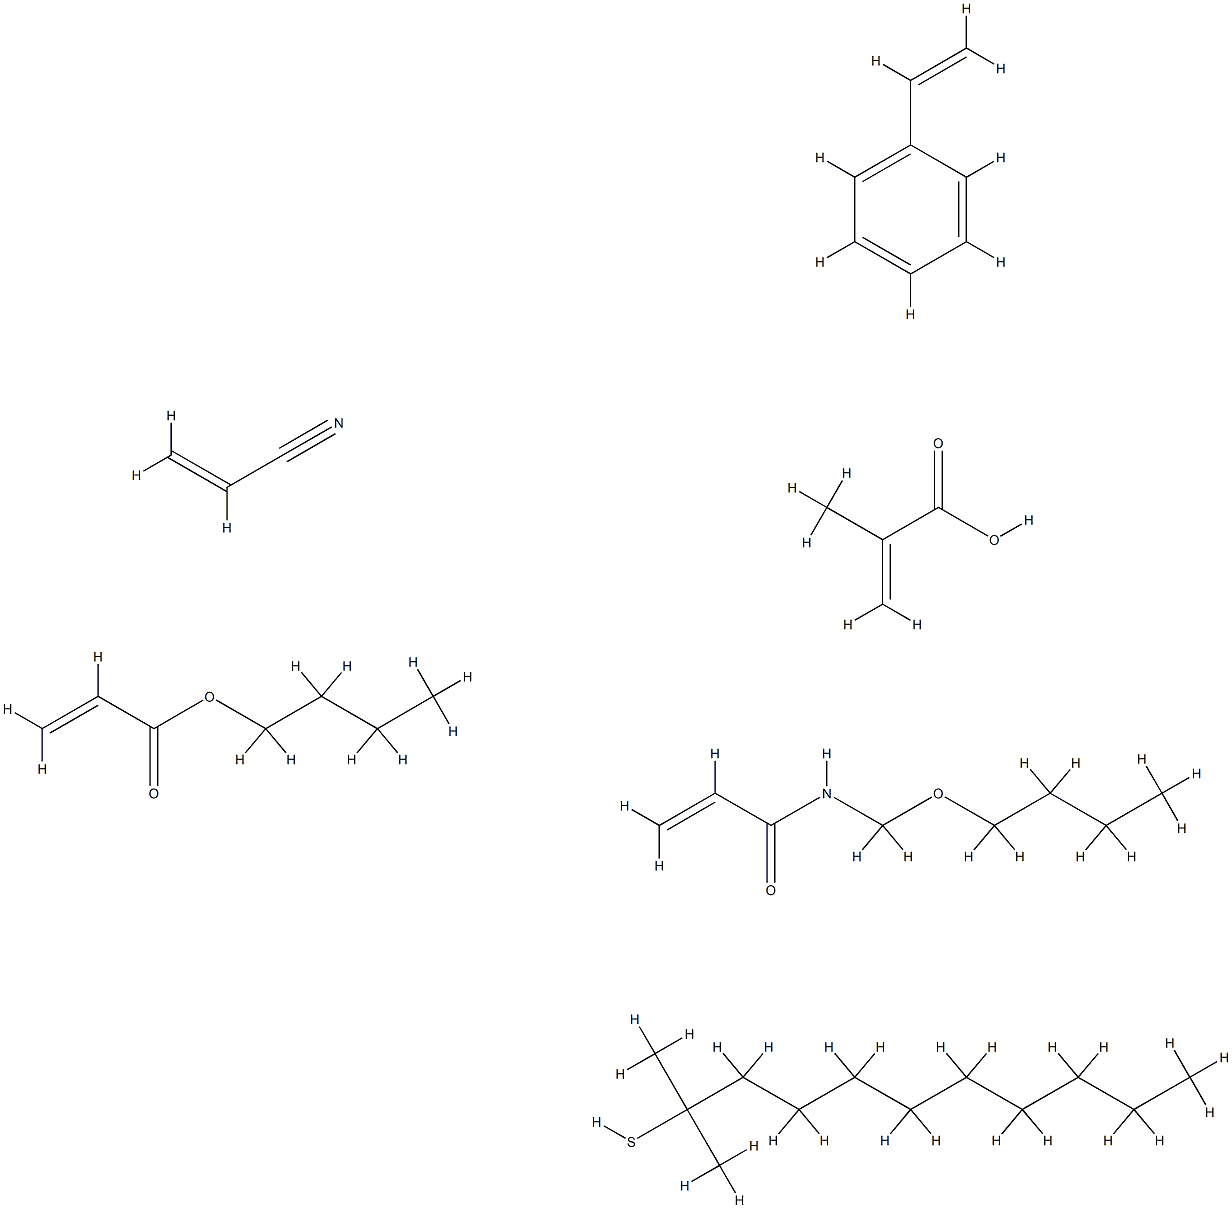 66037-32-9 2-Propenoic acid, 2-methyl-, telomer with N-(butoxymethyl)-2-propenamide, butyl 2-propenoate, tert-dodecanethiol, ethenylbenzene and 2-propenenitrile